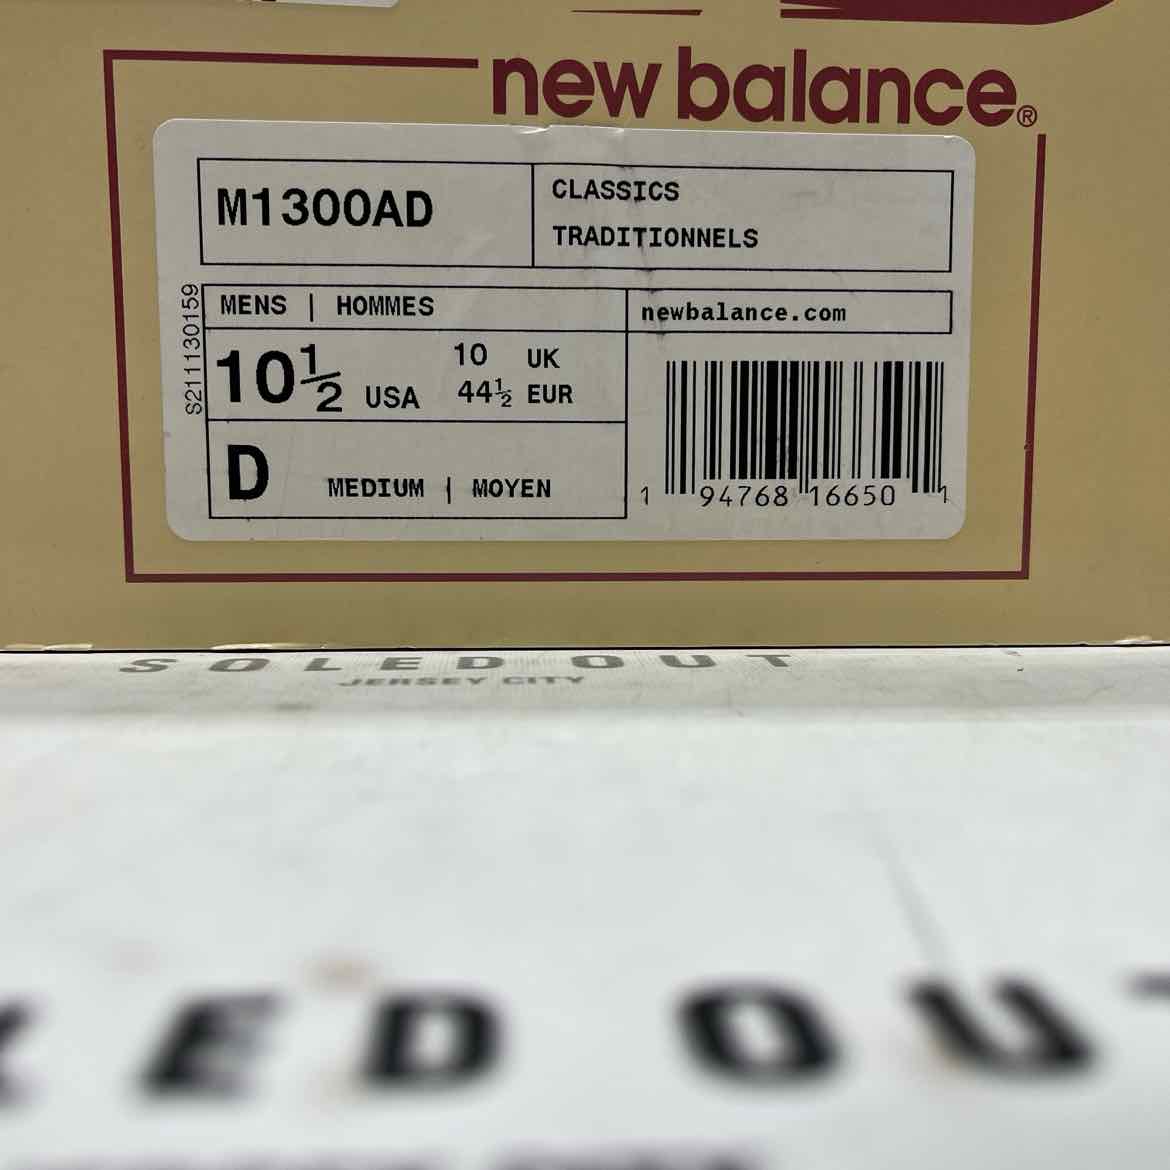 New Balance 1300 "Ald Pink" 2021 New Size 10.5